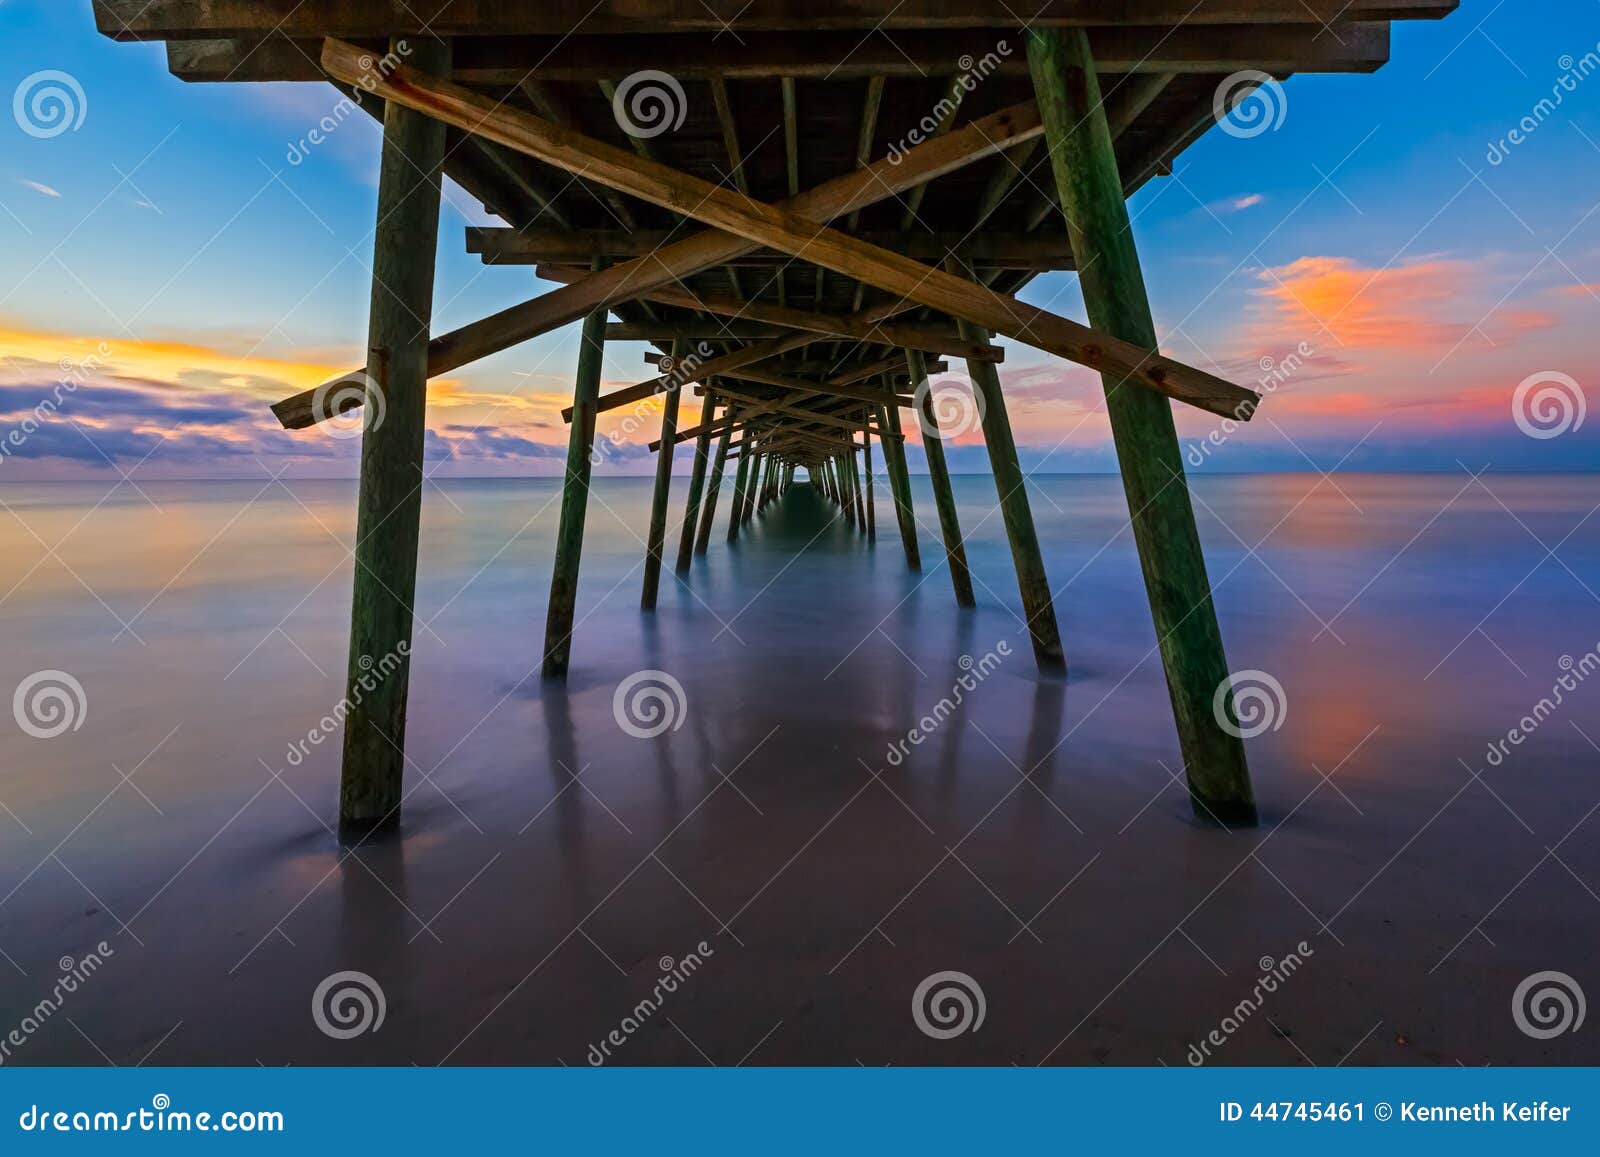 bogue inlet pier at daybreak